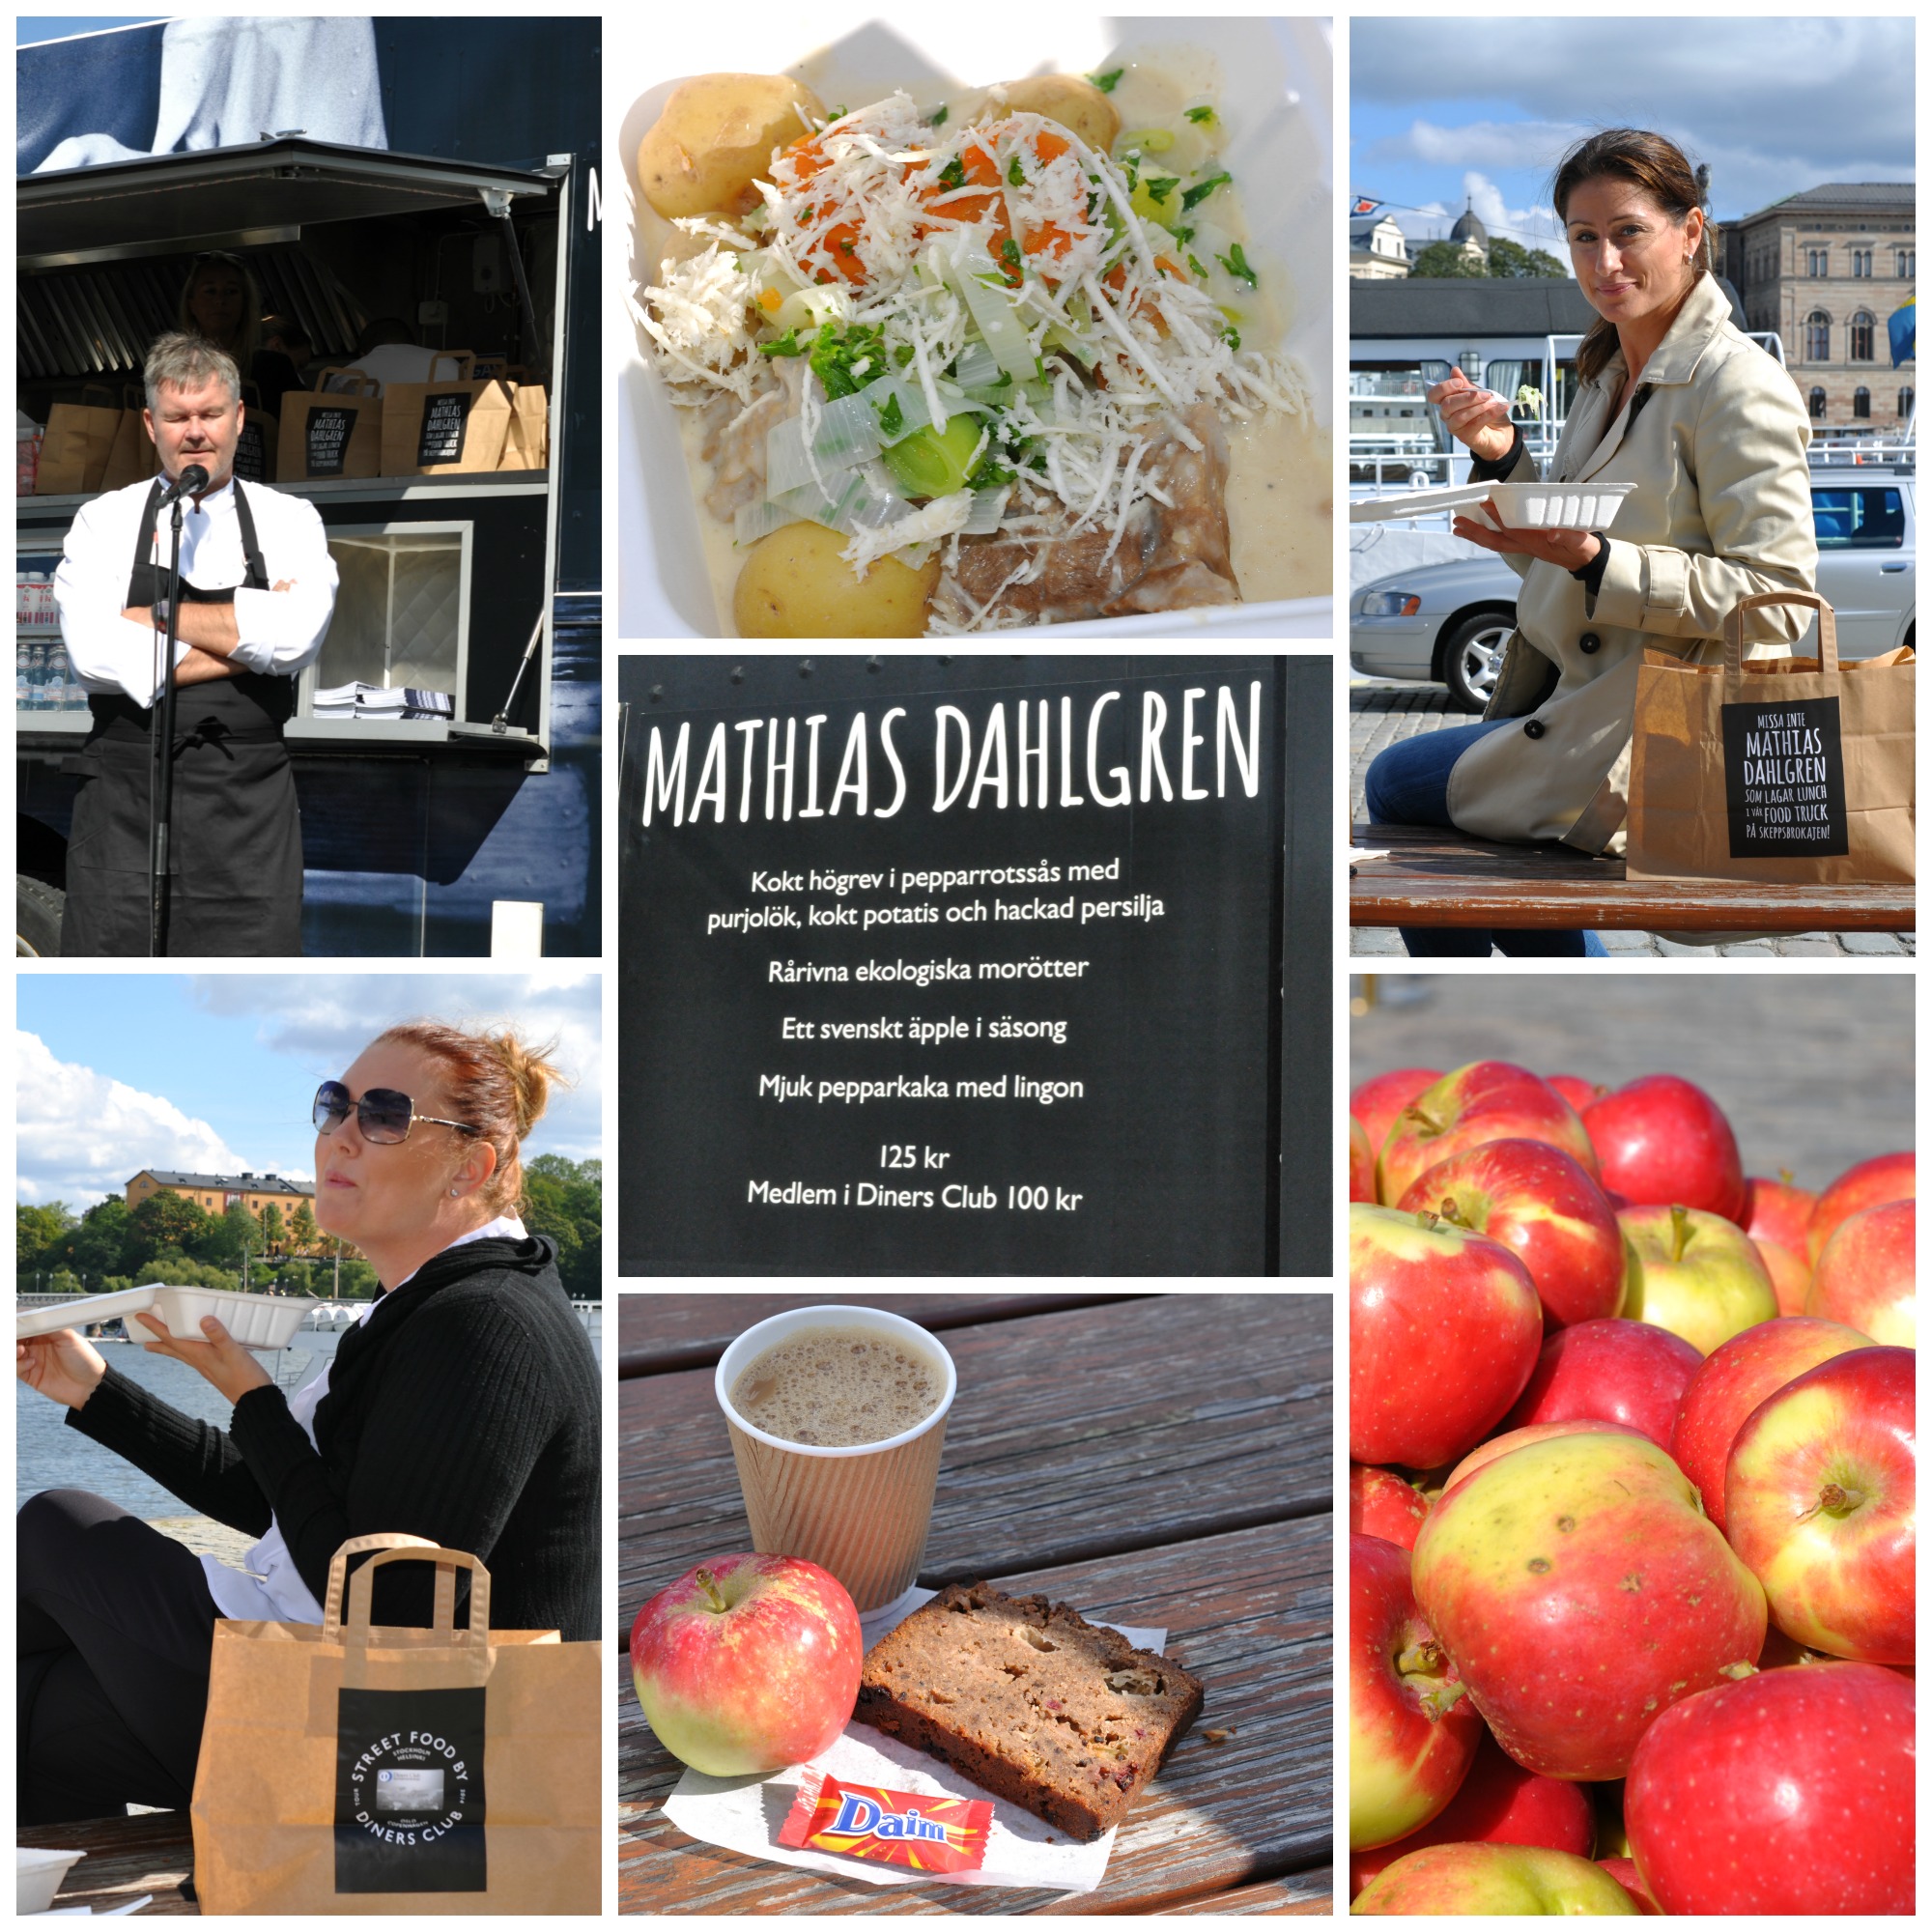 Mathias dahlgren street food